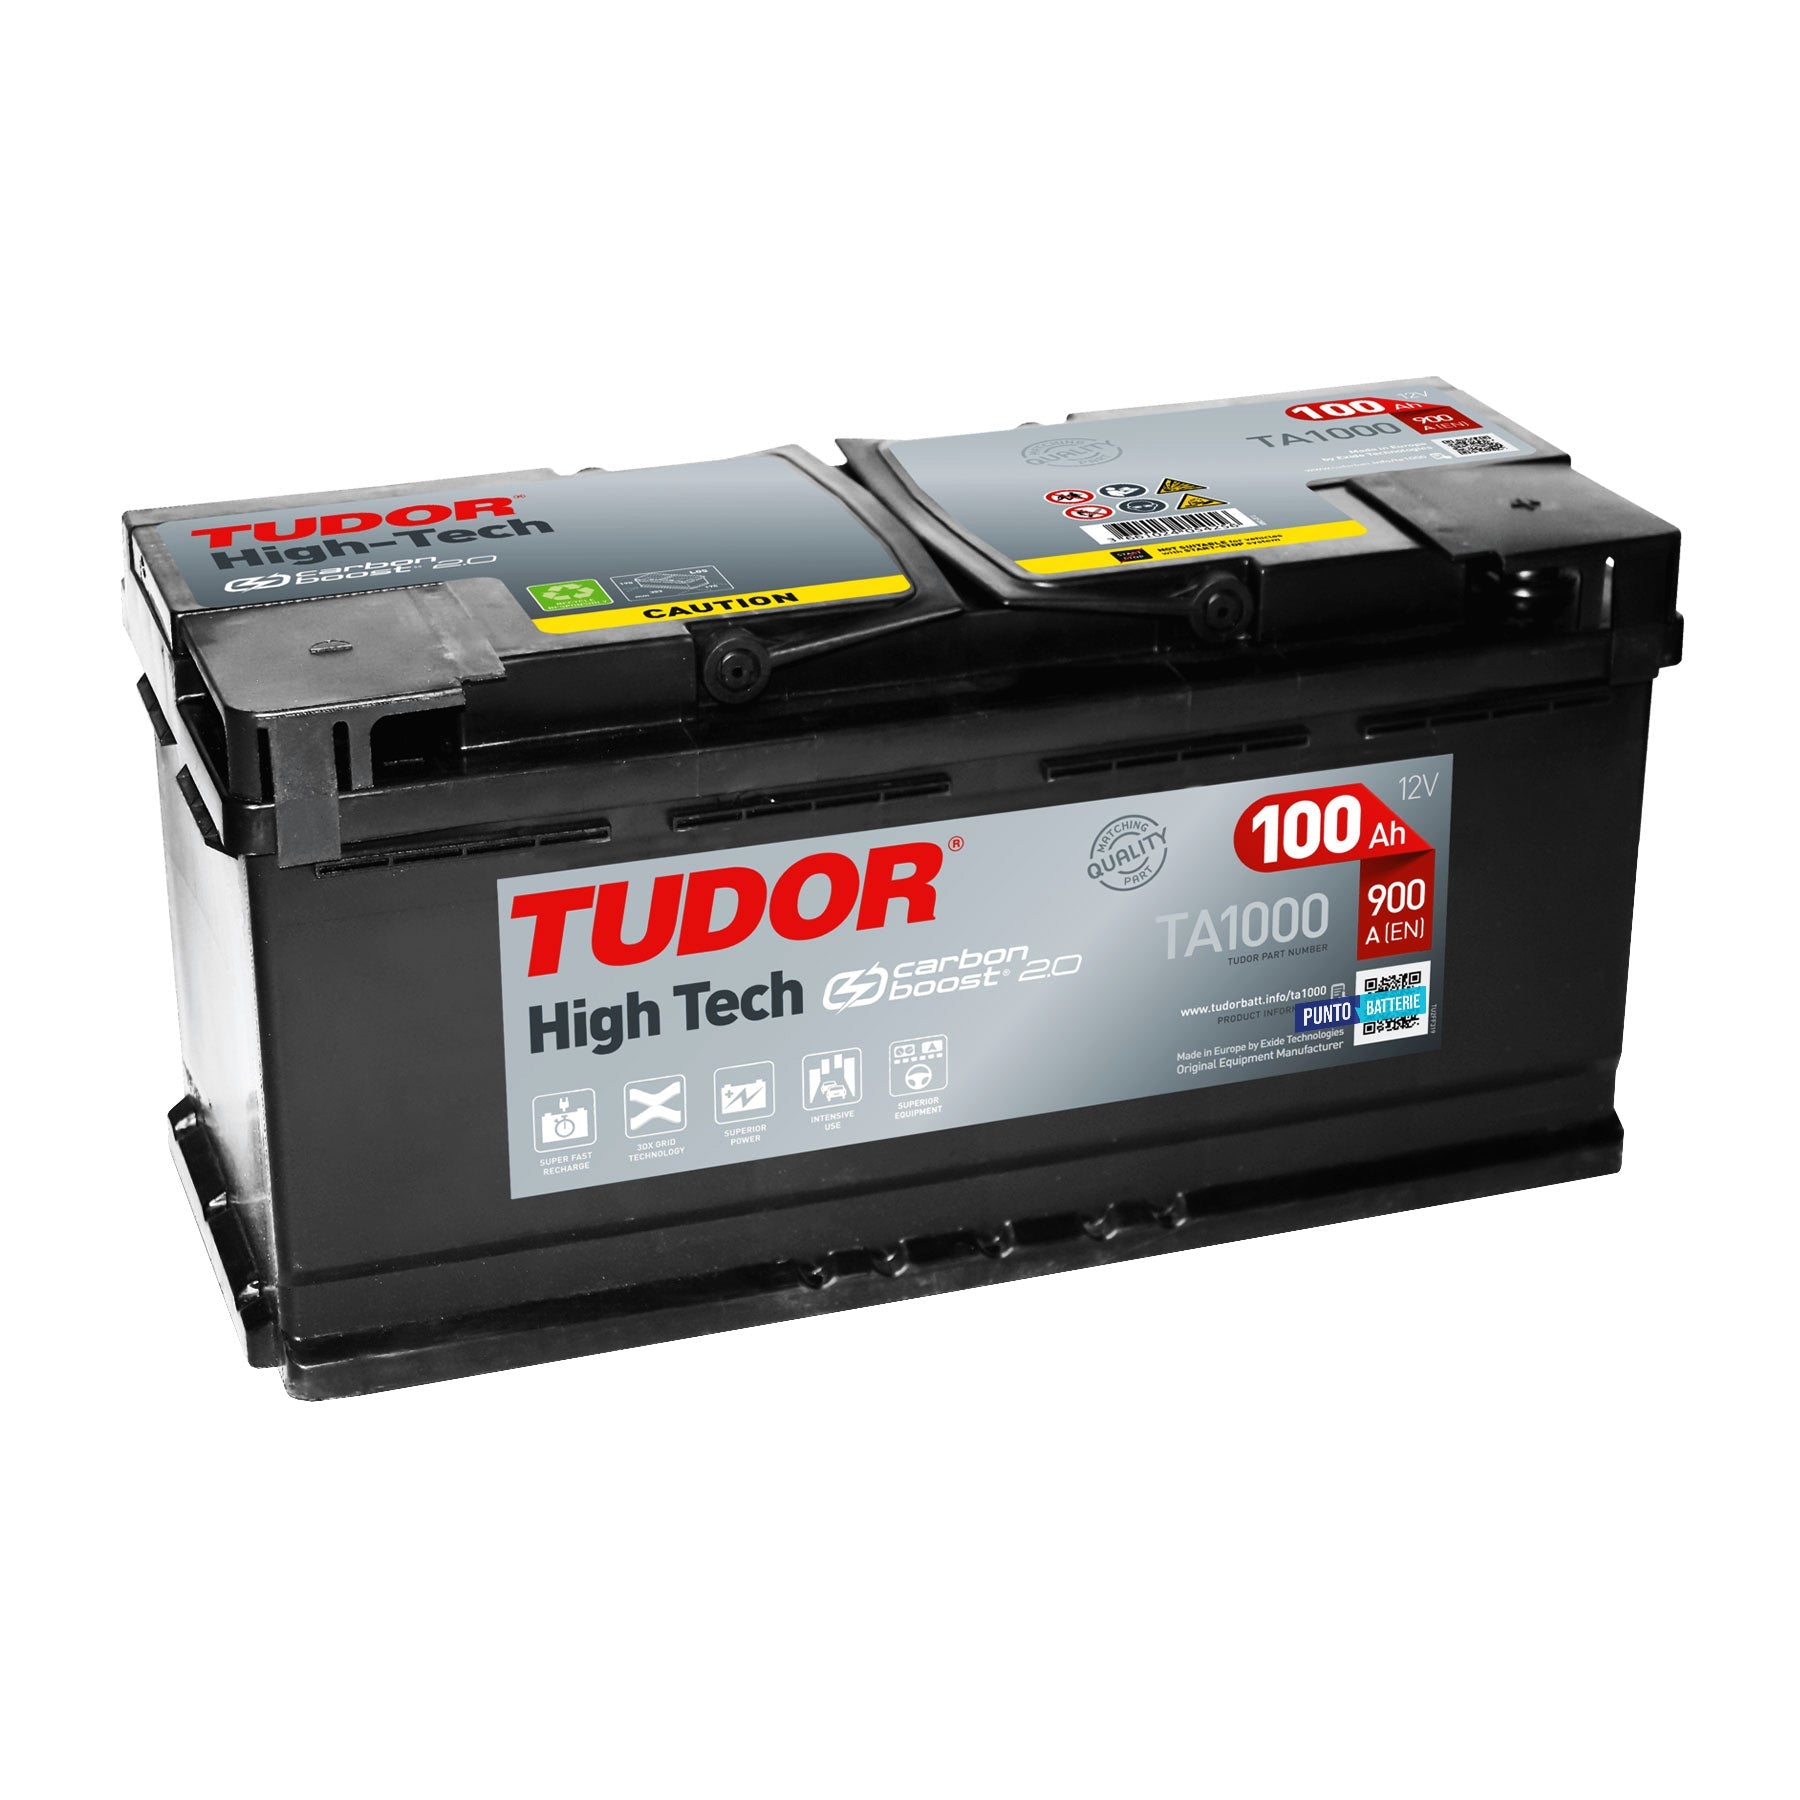 Batteria Tudor TA1000 - High Tech (12V, 100Ah, 900A) - Puntobatterie